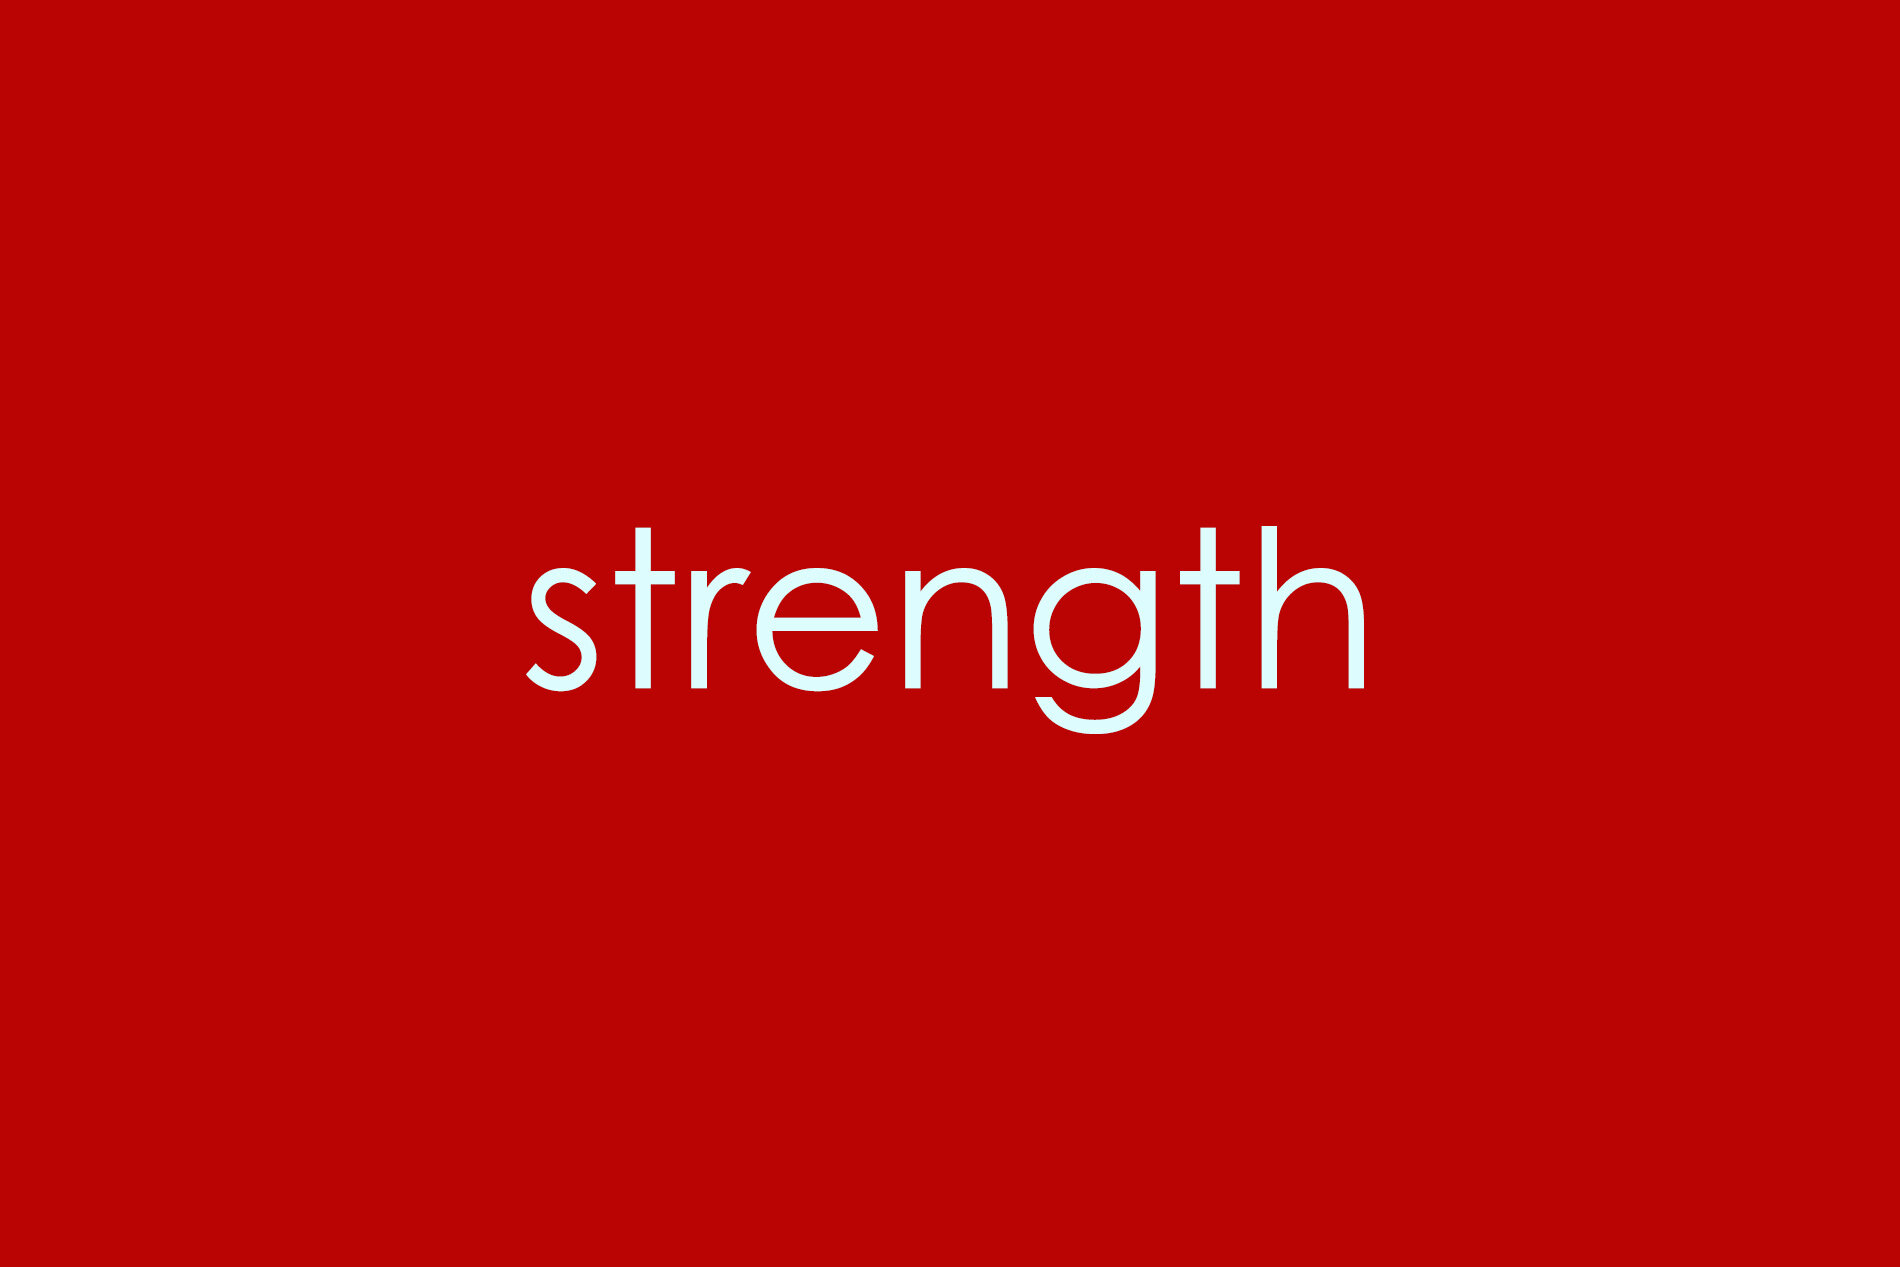 strength_copyright_broad_dayligh.jpg